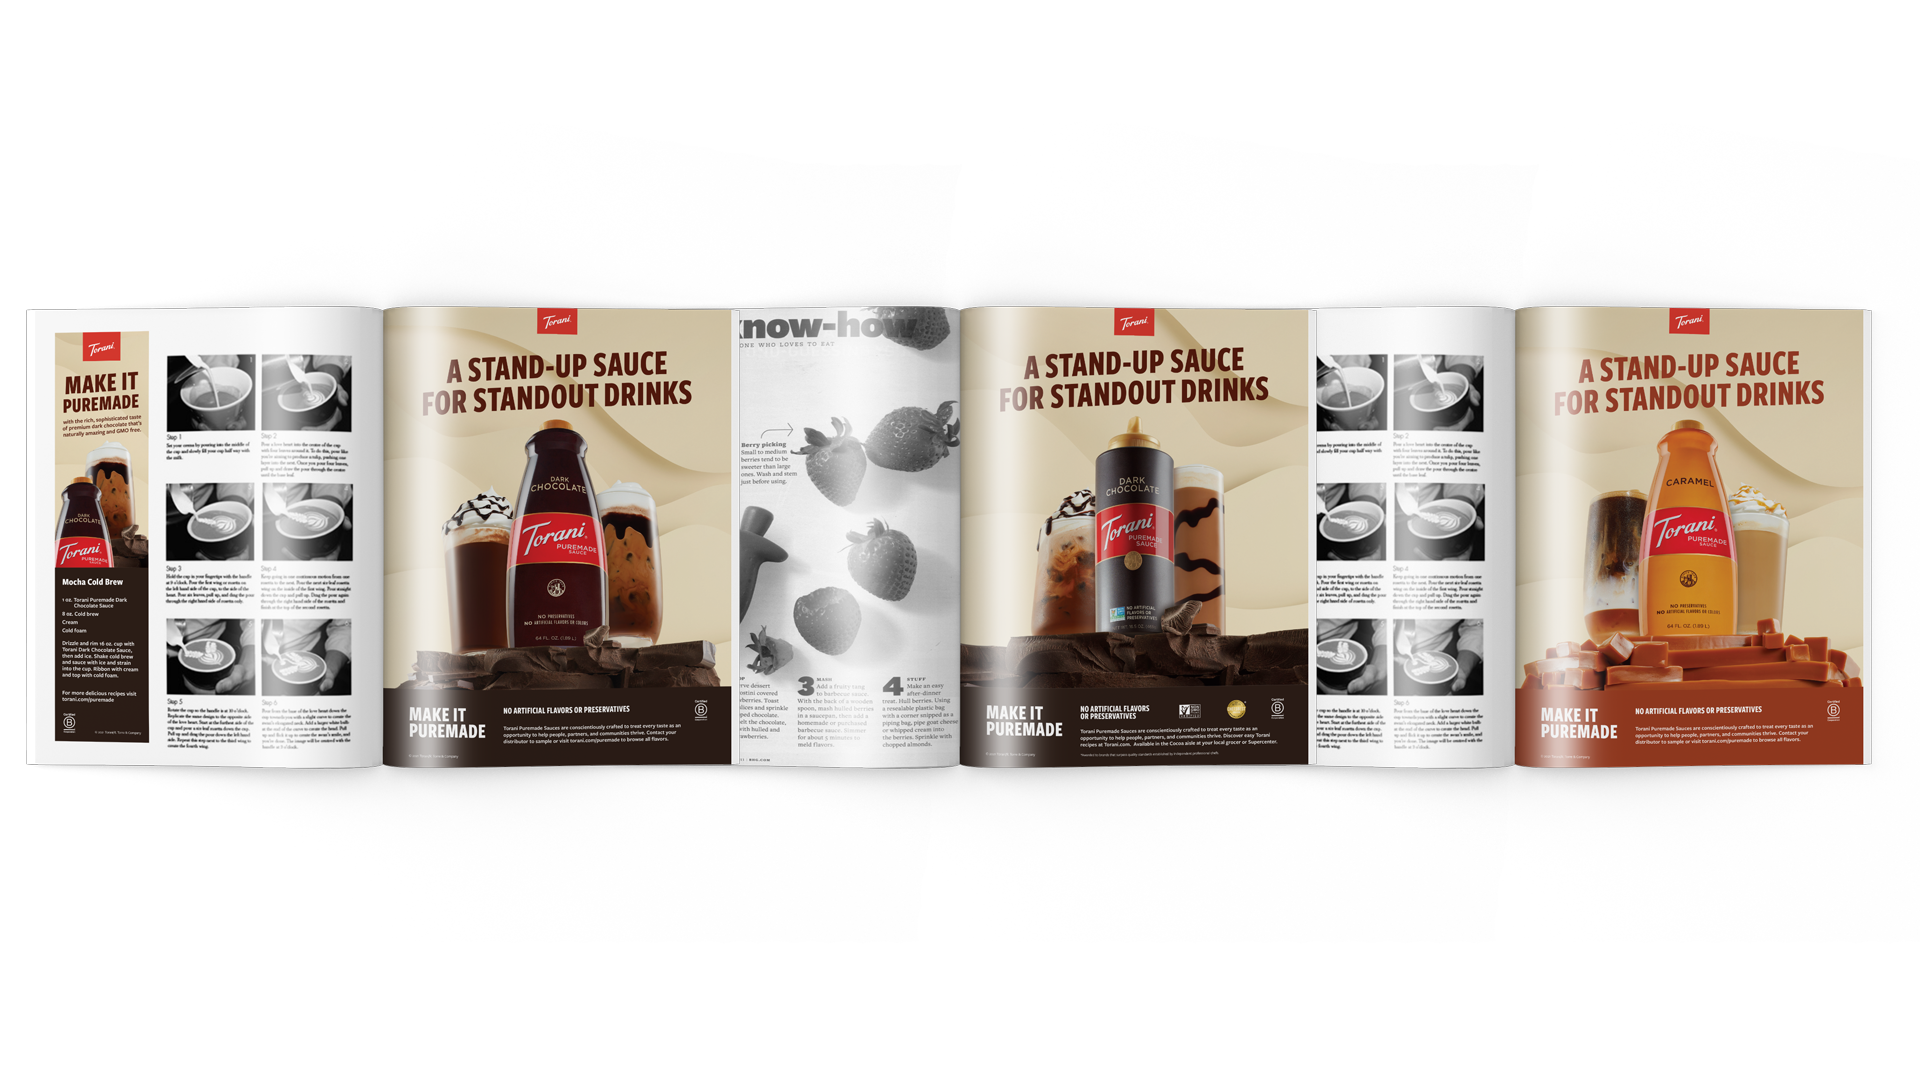 Magazine print ads for the Torani Stand-up Sauce campaign